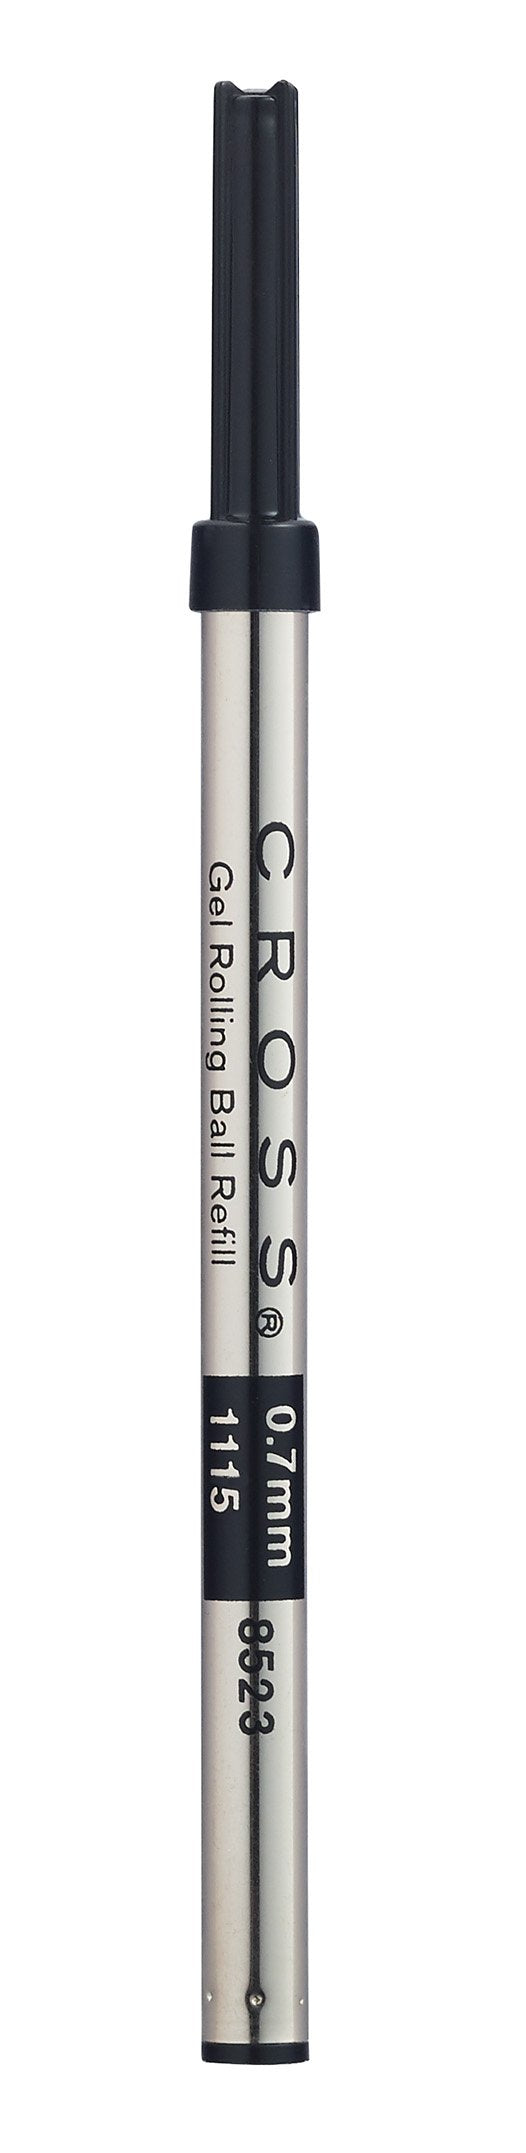 Cross Selectip Gel Rollingball Pen Refill, Black, 1 per Card (8523)